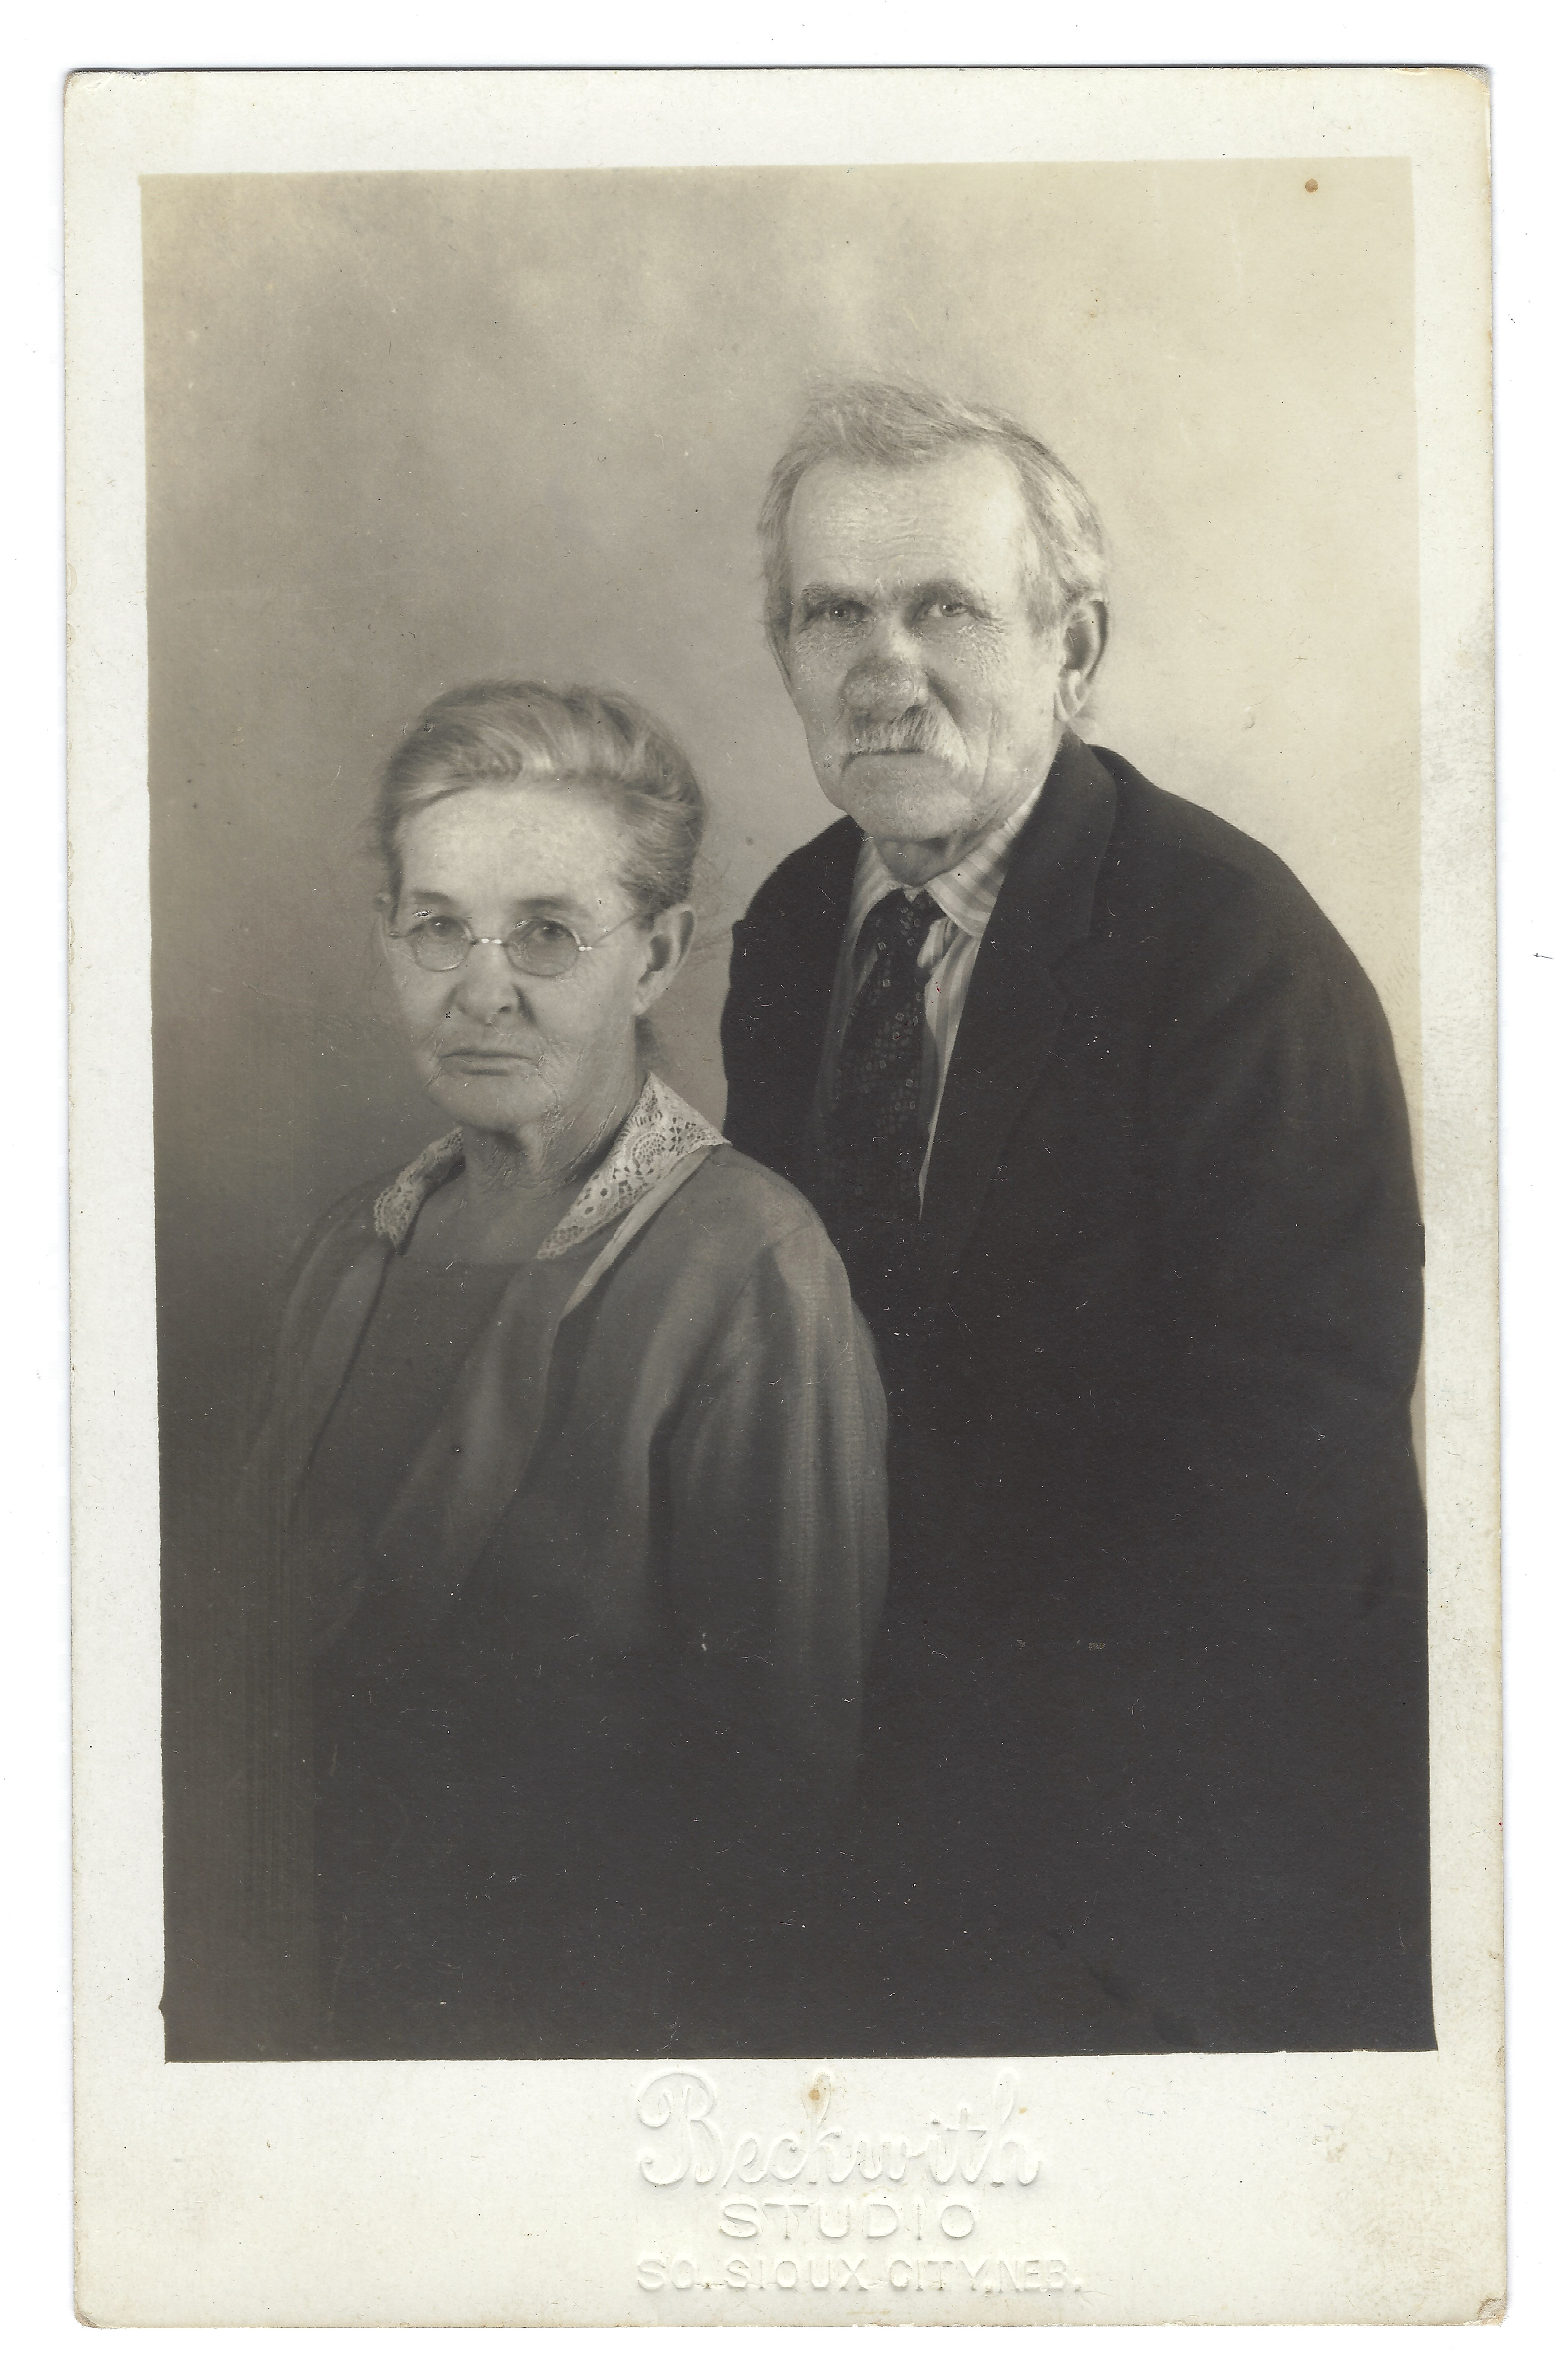 John C. Nichols and Eunice C. Amick Nichols?, photo found in Lenoir City, TN